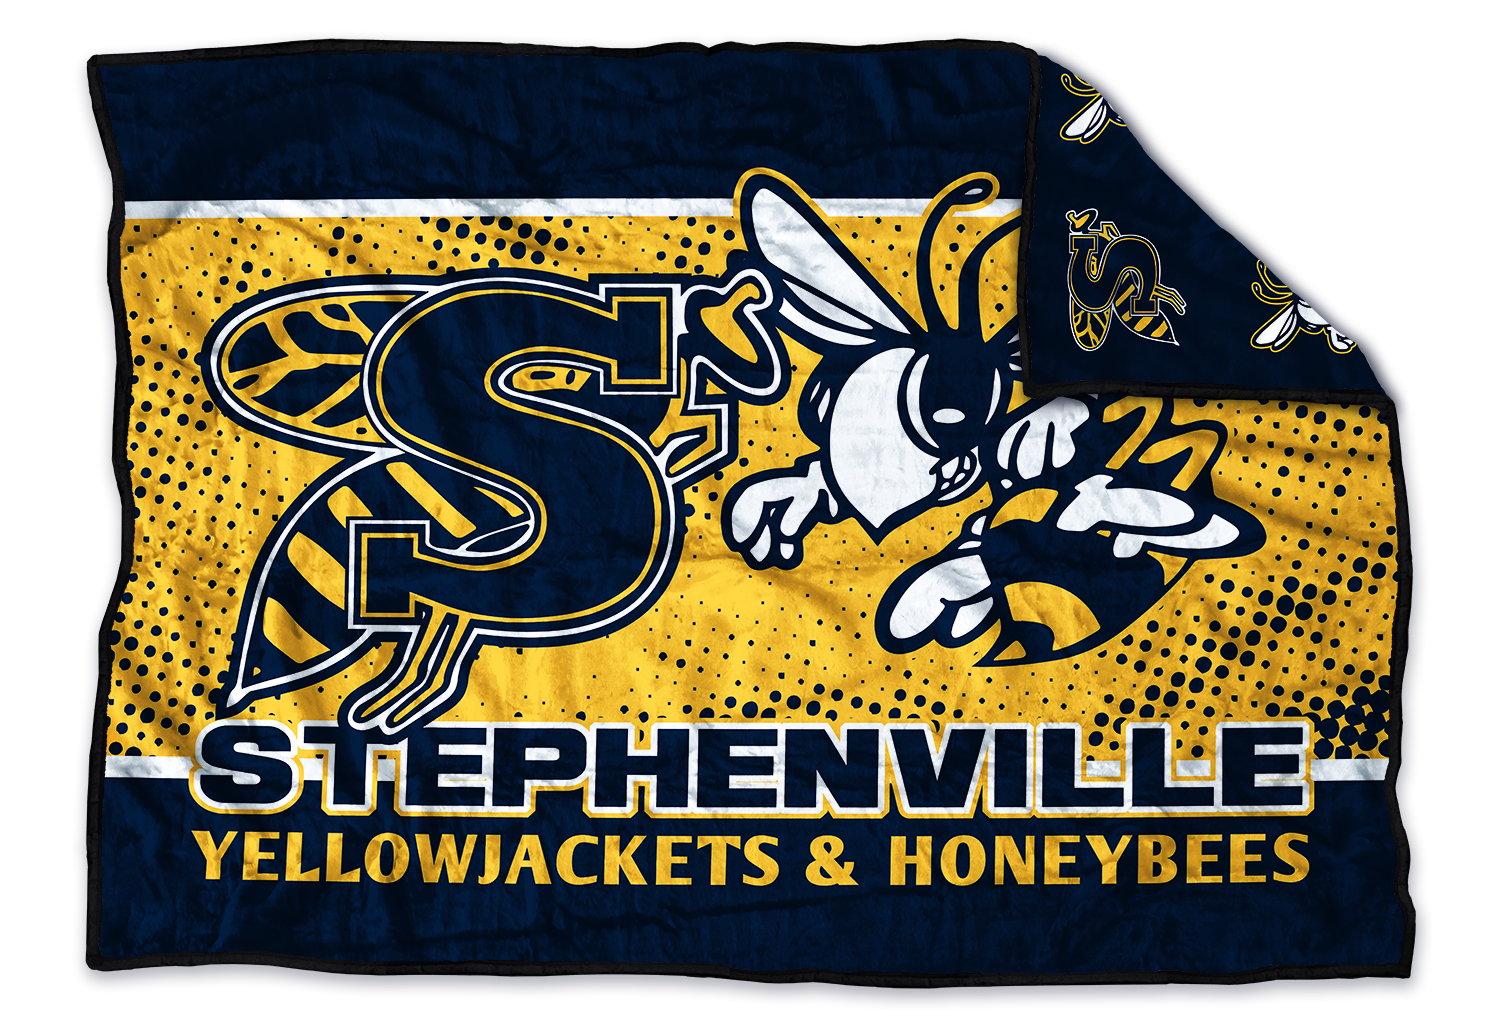 Stephenville Yellowjackets & Honeybees